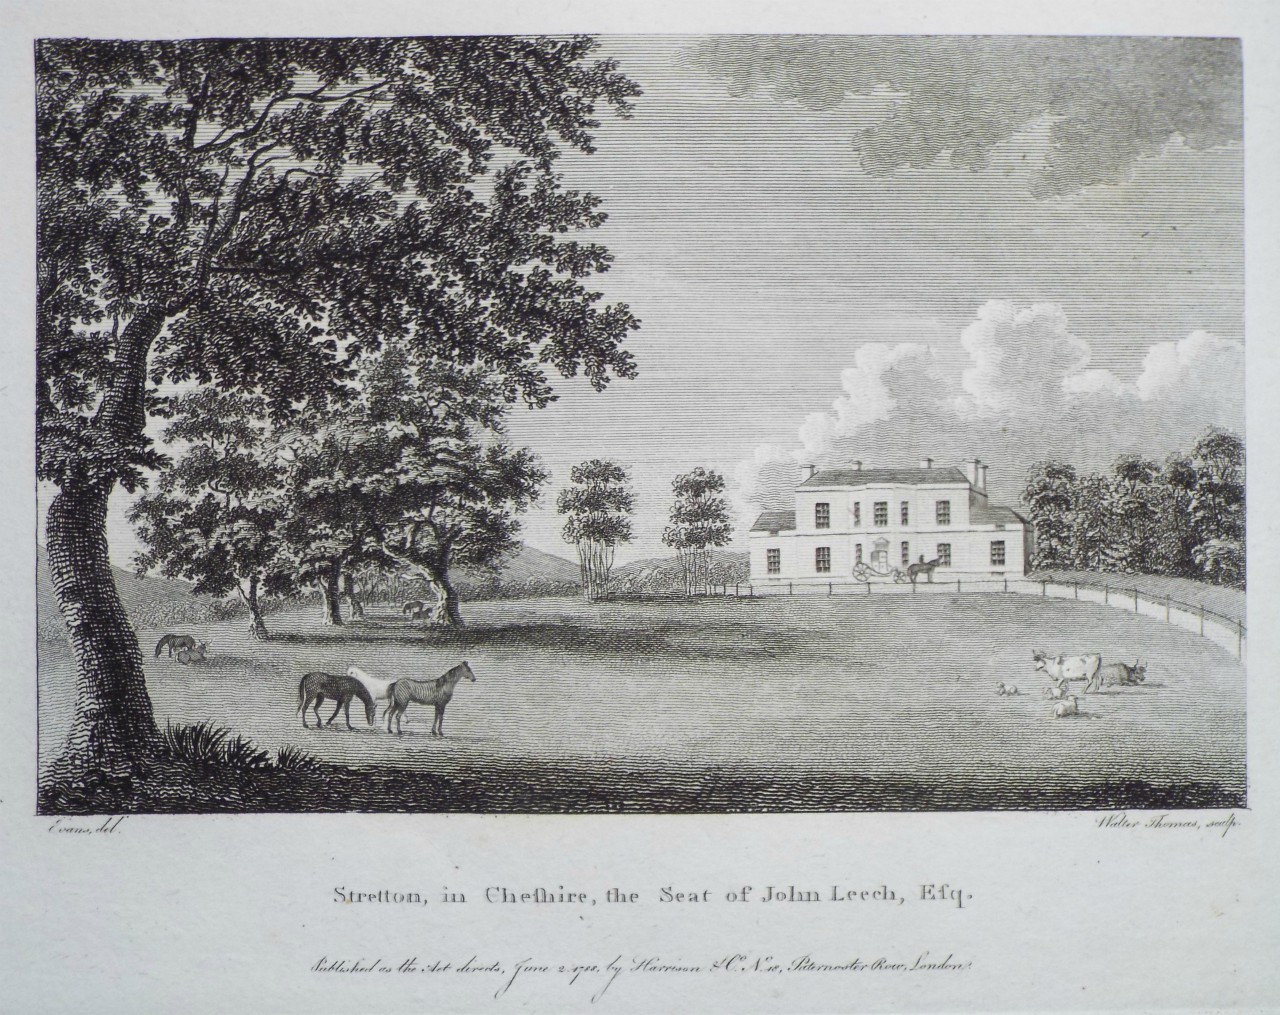 Print - Stretton, in Cheshire, the Seat of John Leech, Esq. - Thomas